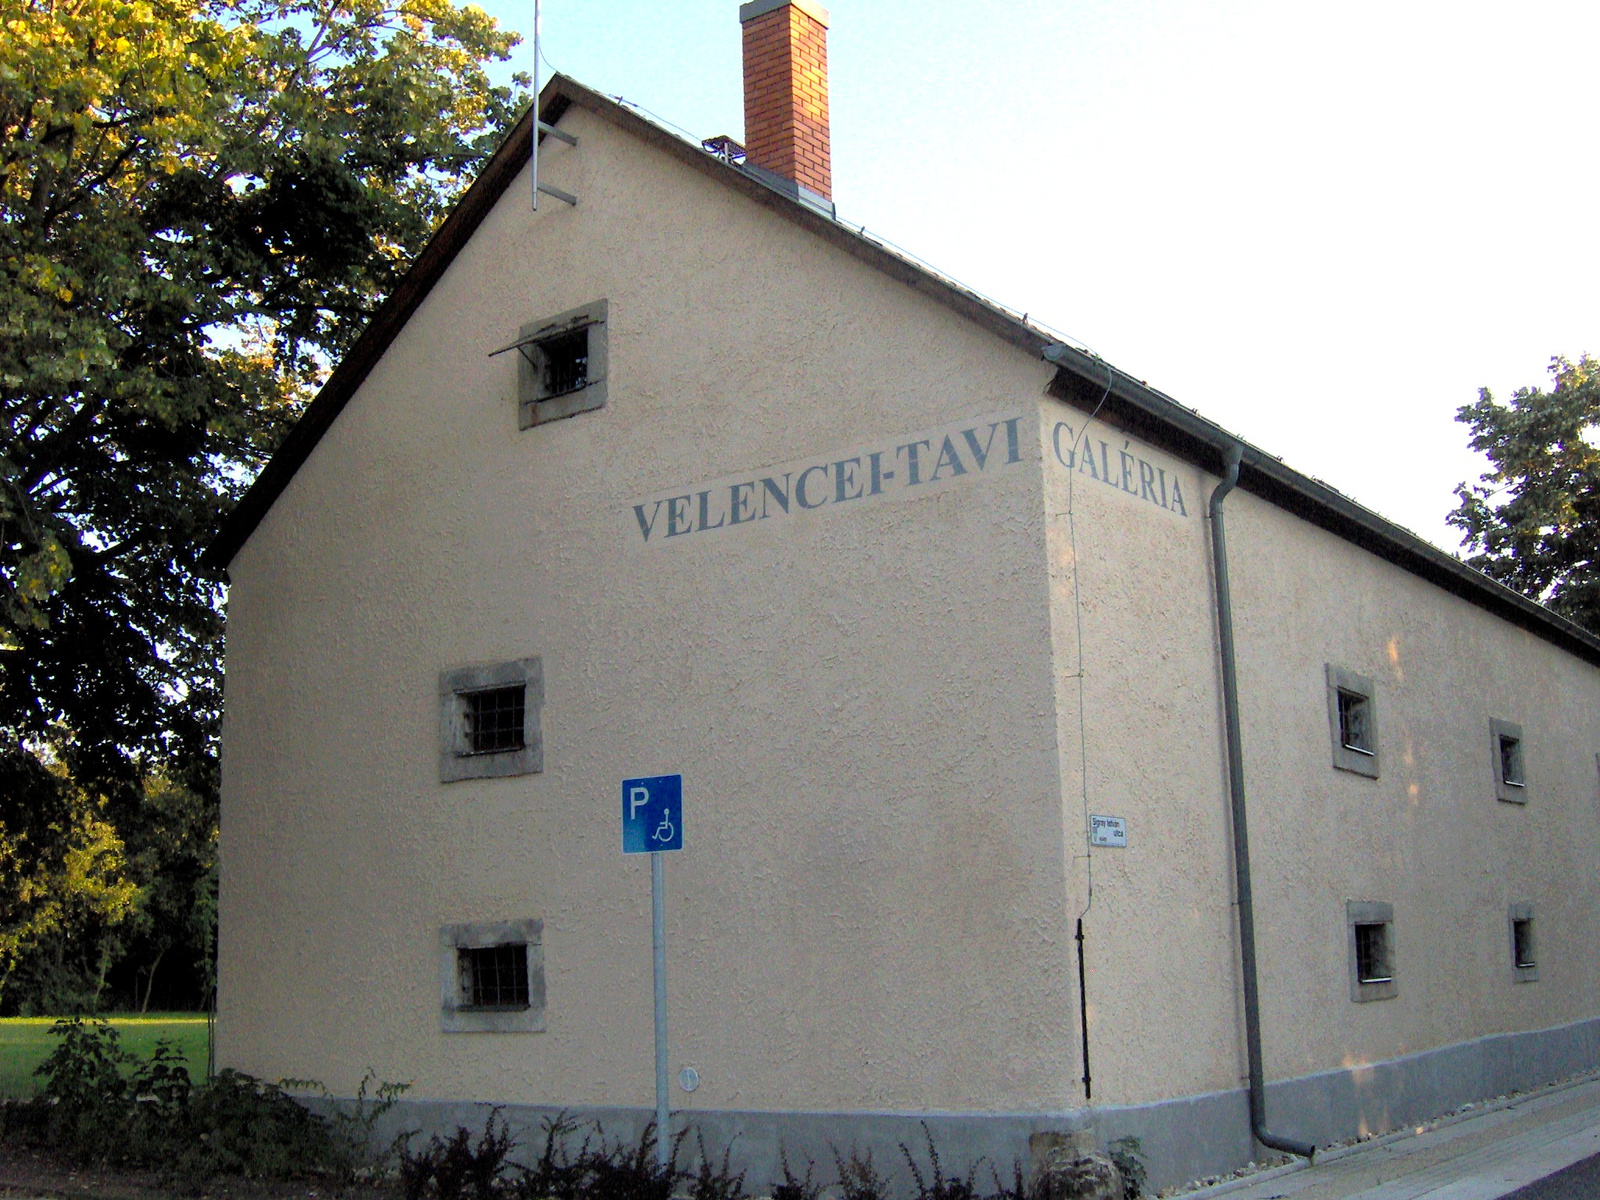 Velence-tavi  Galéria